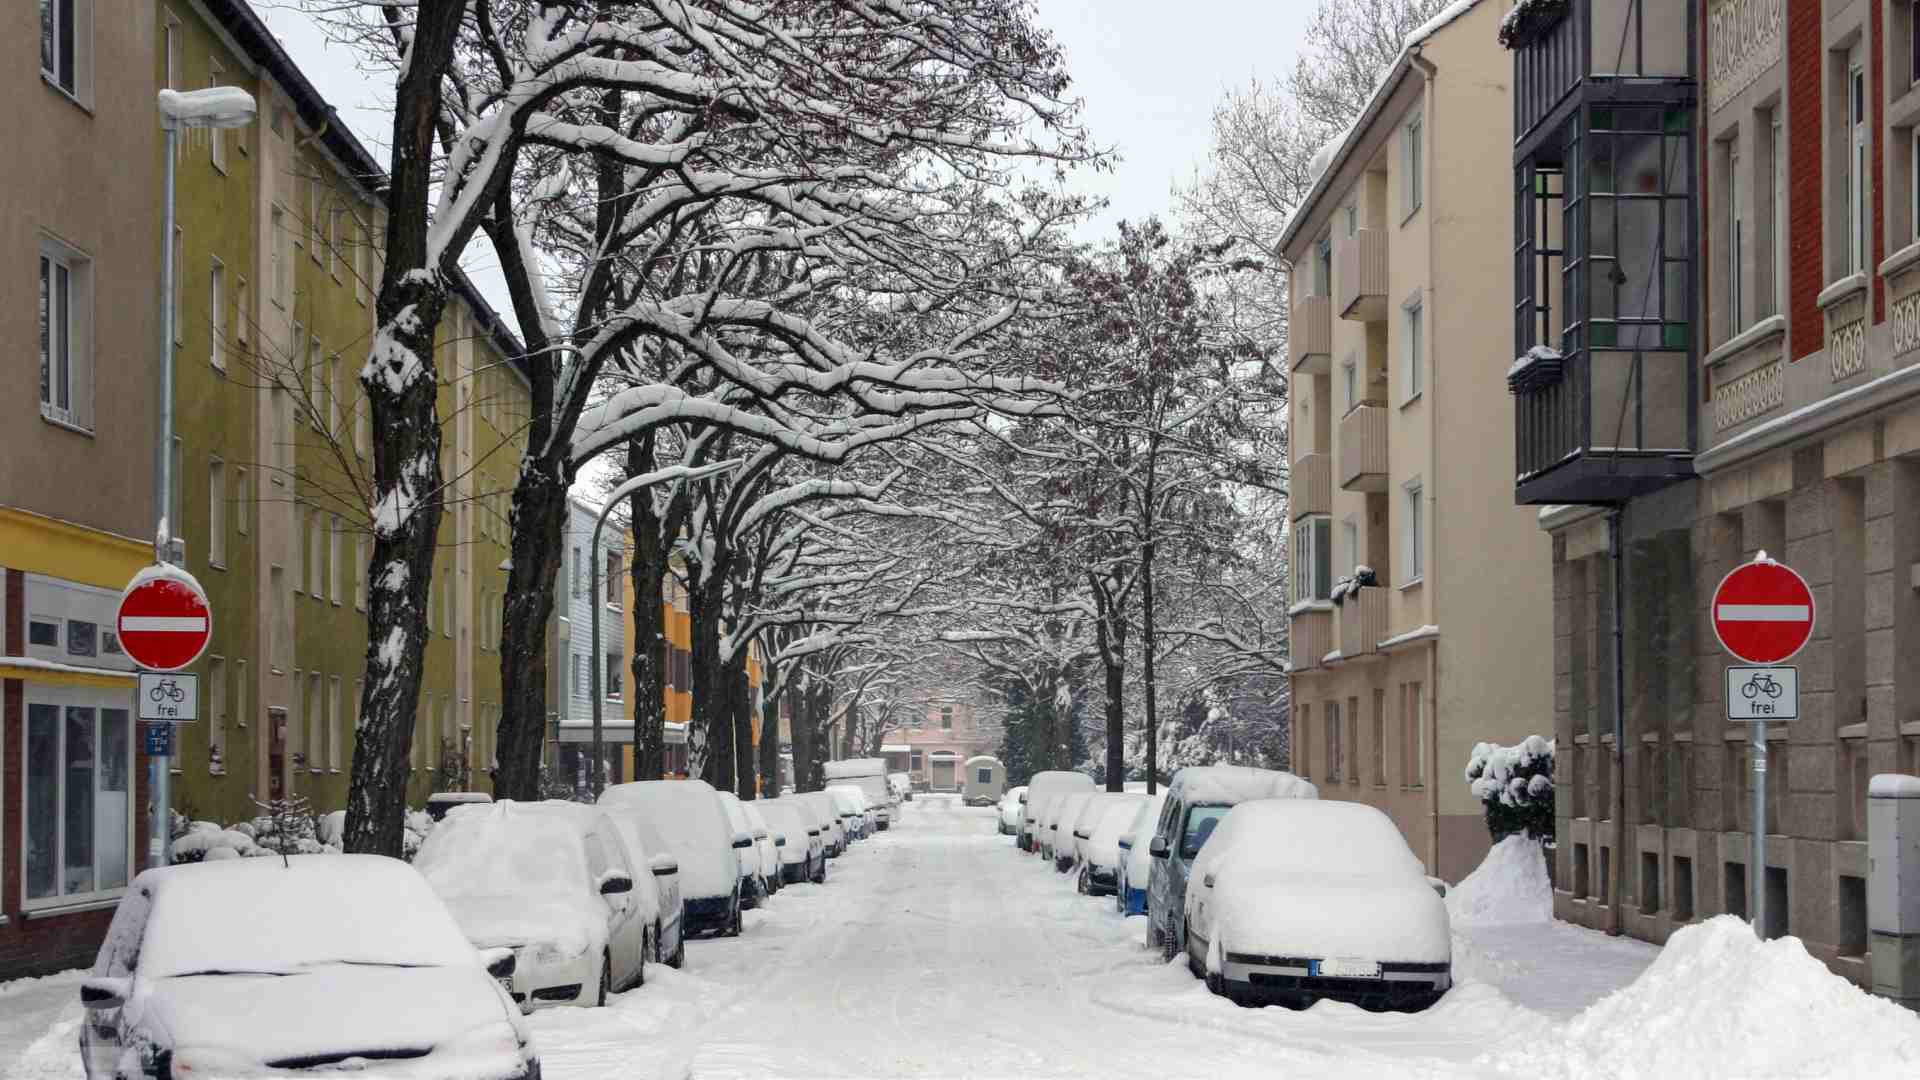 Hartgerstraße